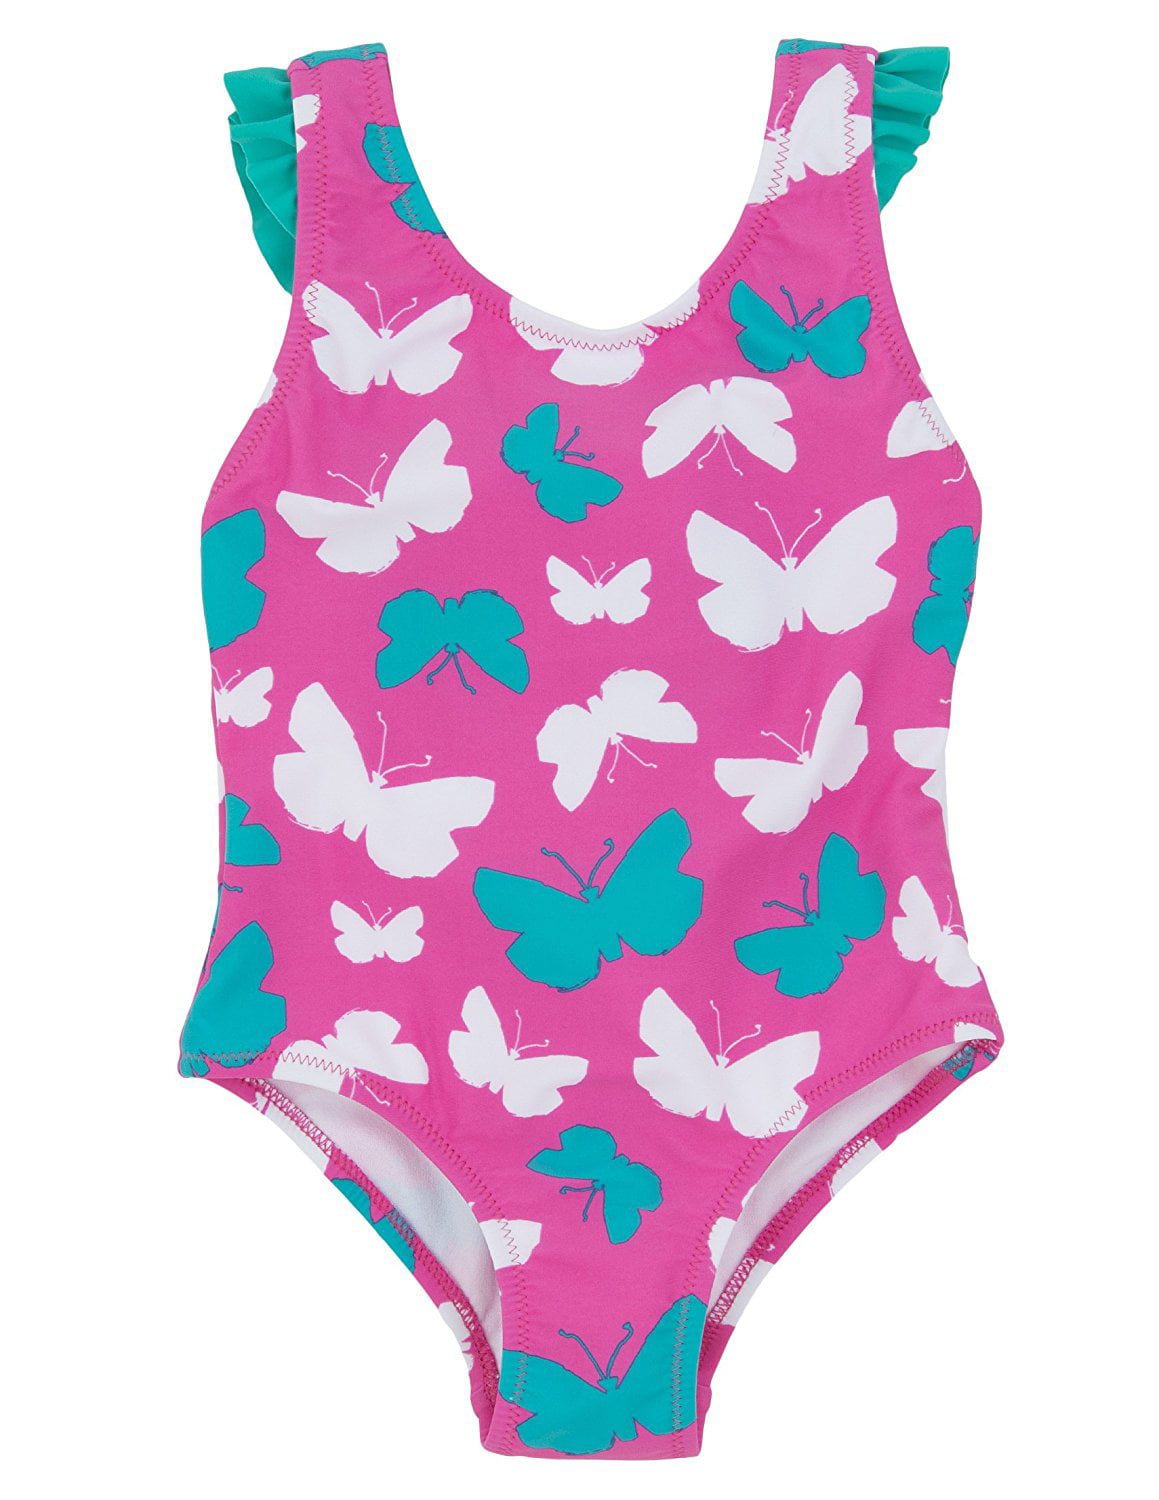 Hatley Big Girls' Graphic Butterflies One Piece Swimsuit - Walmart.com